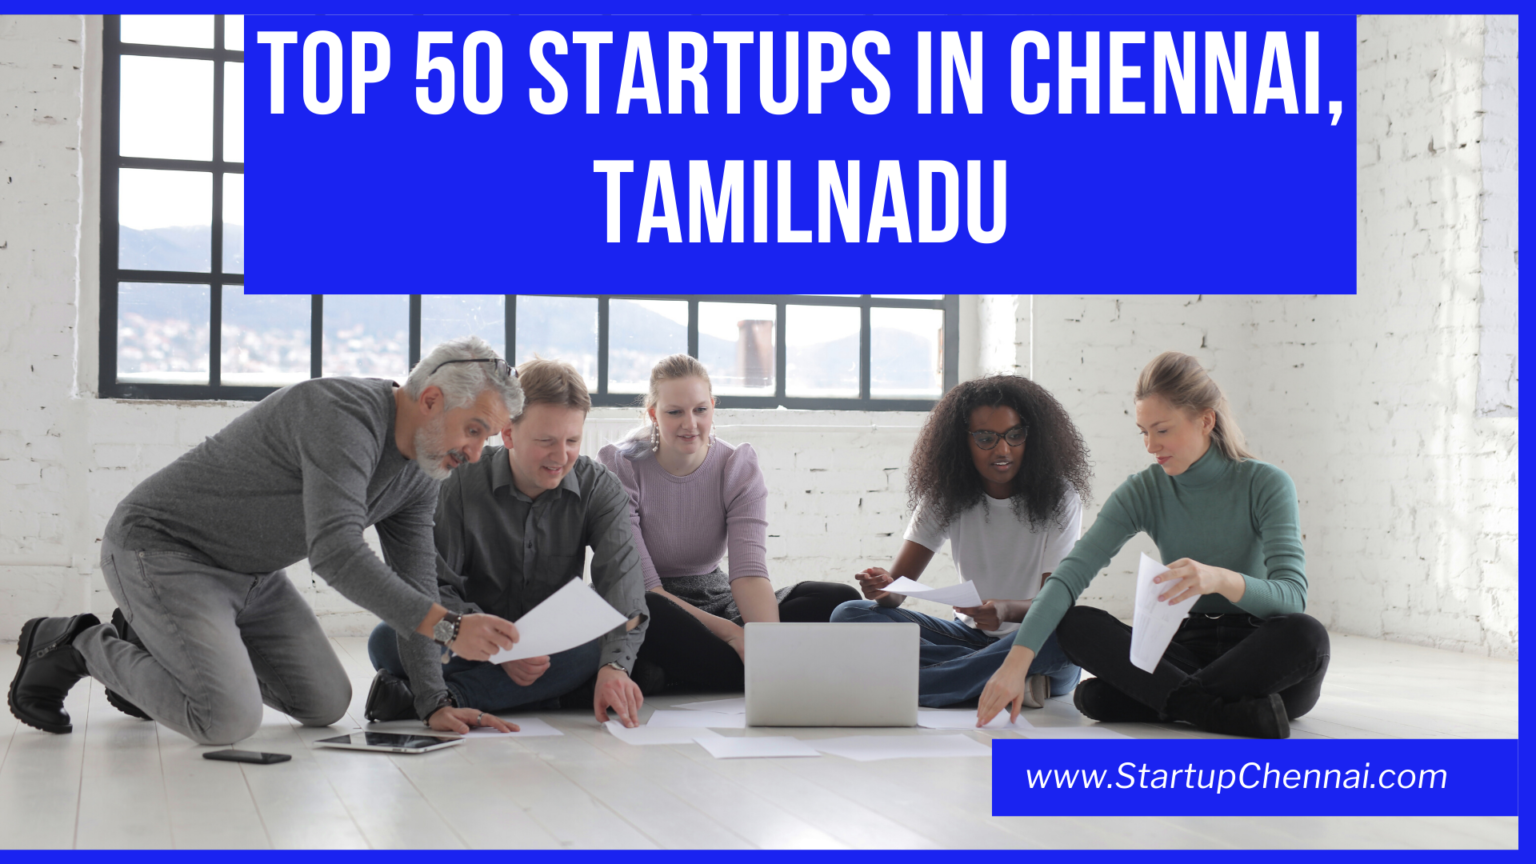 Top 51 Startups in Chennai, Tamil Nadu Latest news & stories of